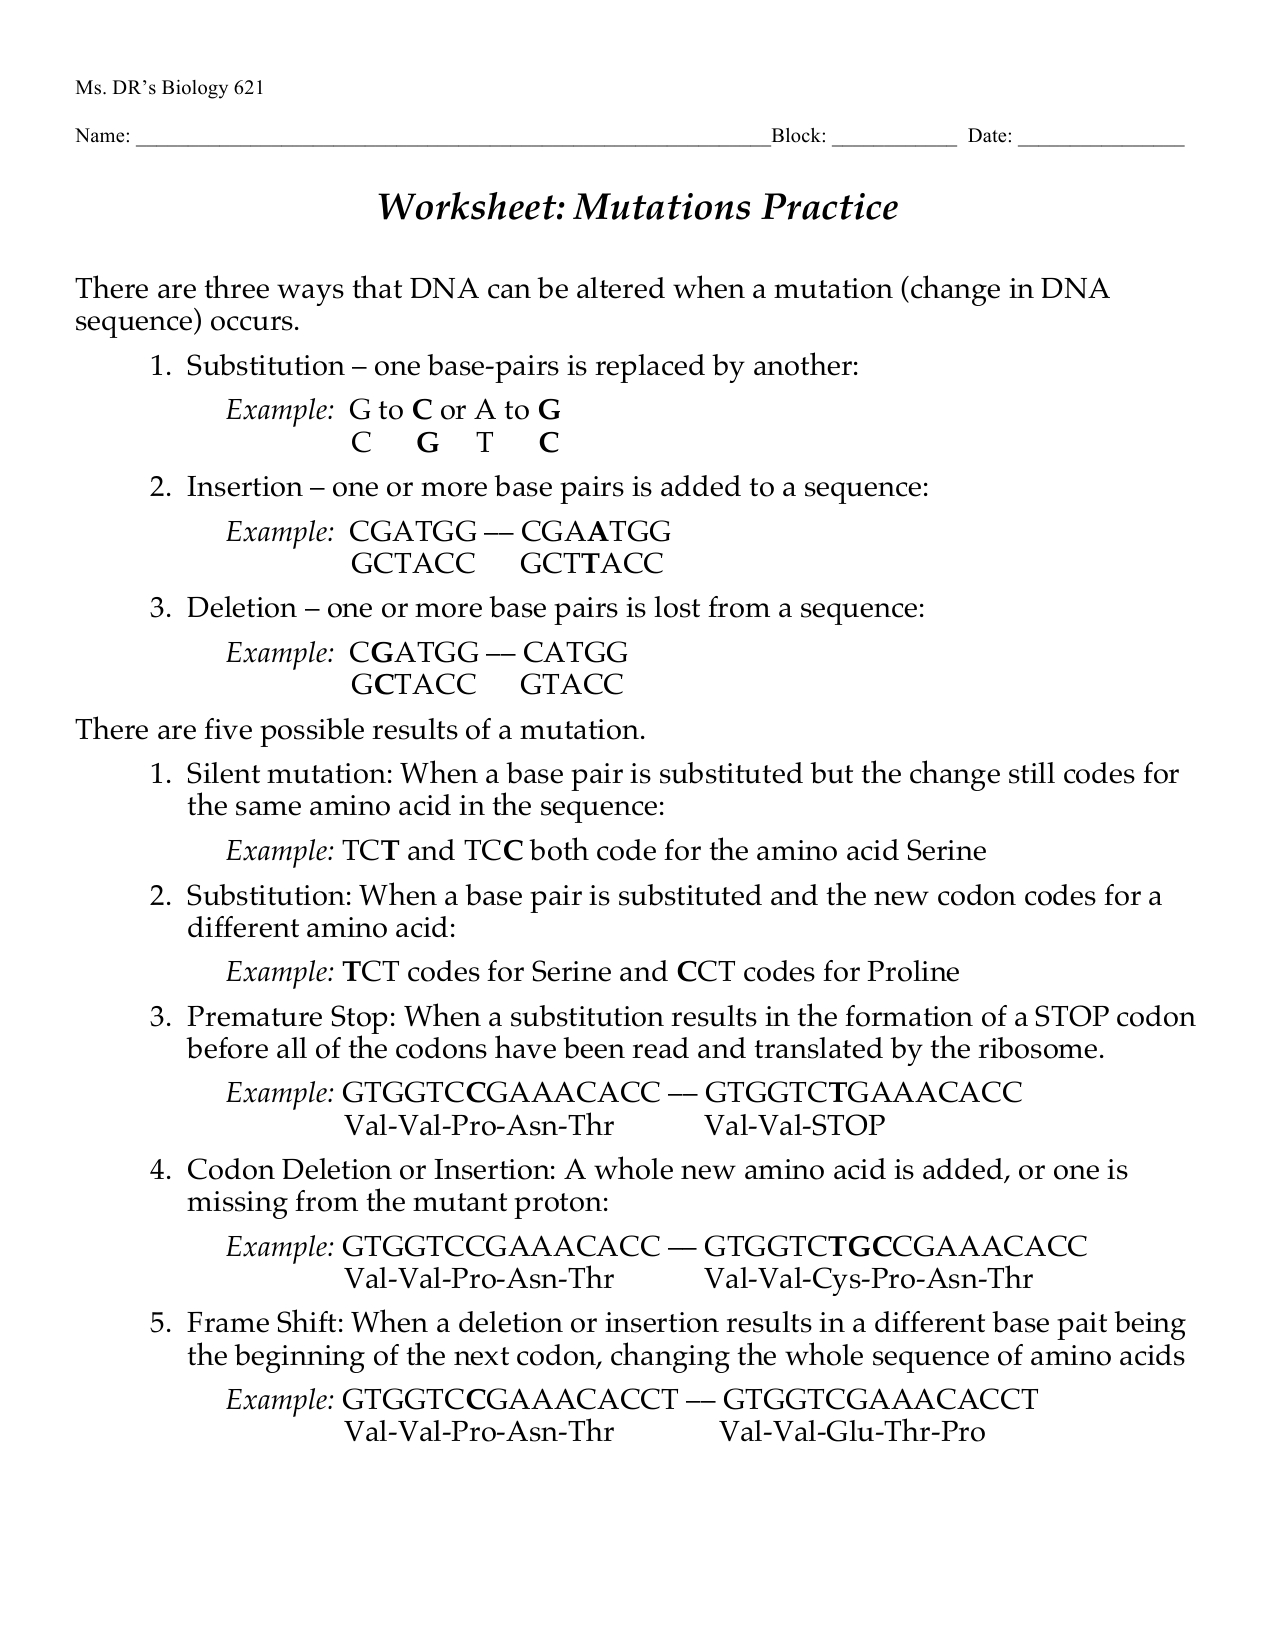 Worksheet Mutations Practice